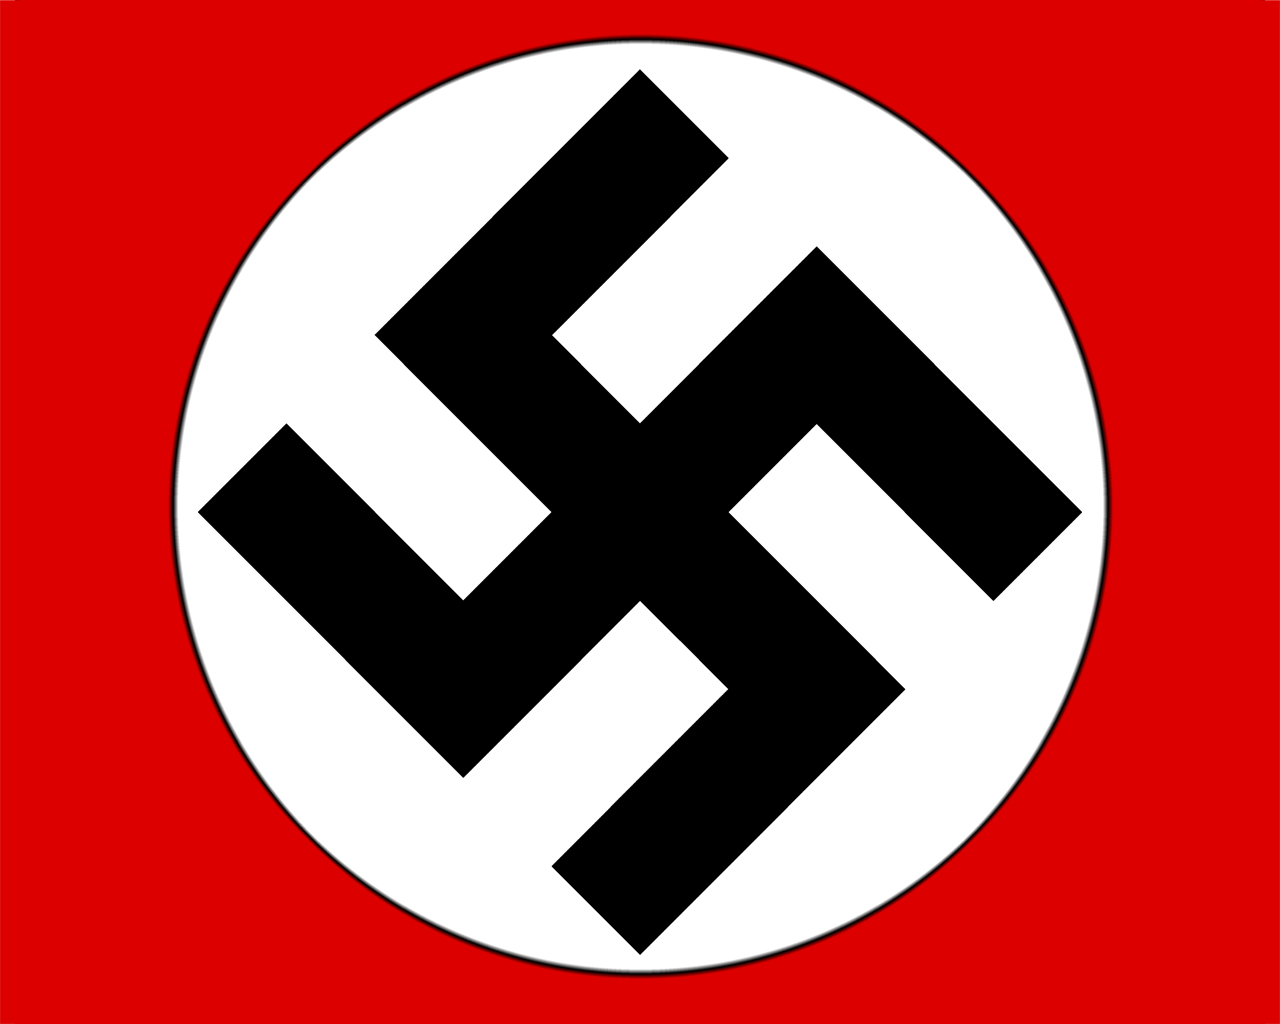 13168992411395705260luka-magnotta-swastika.jpg